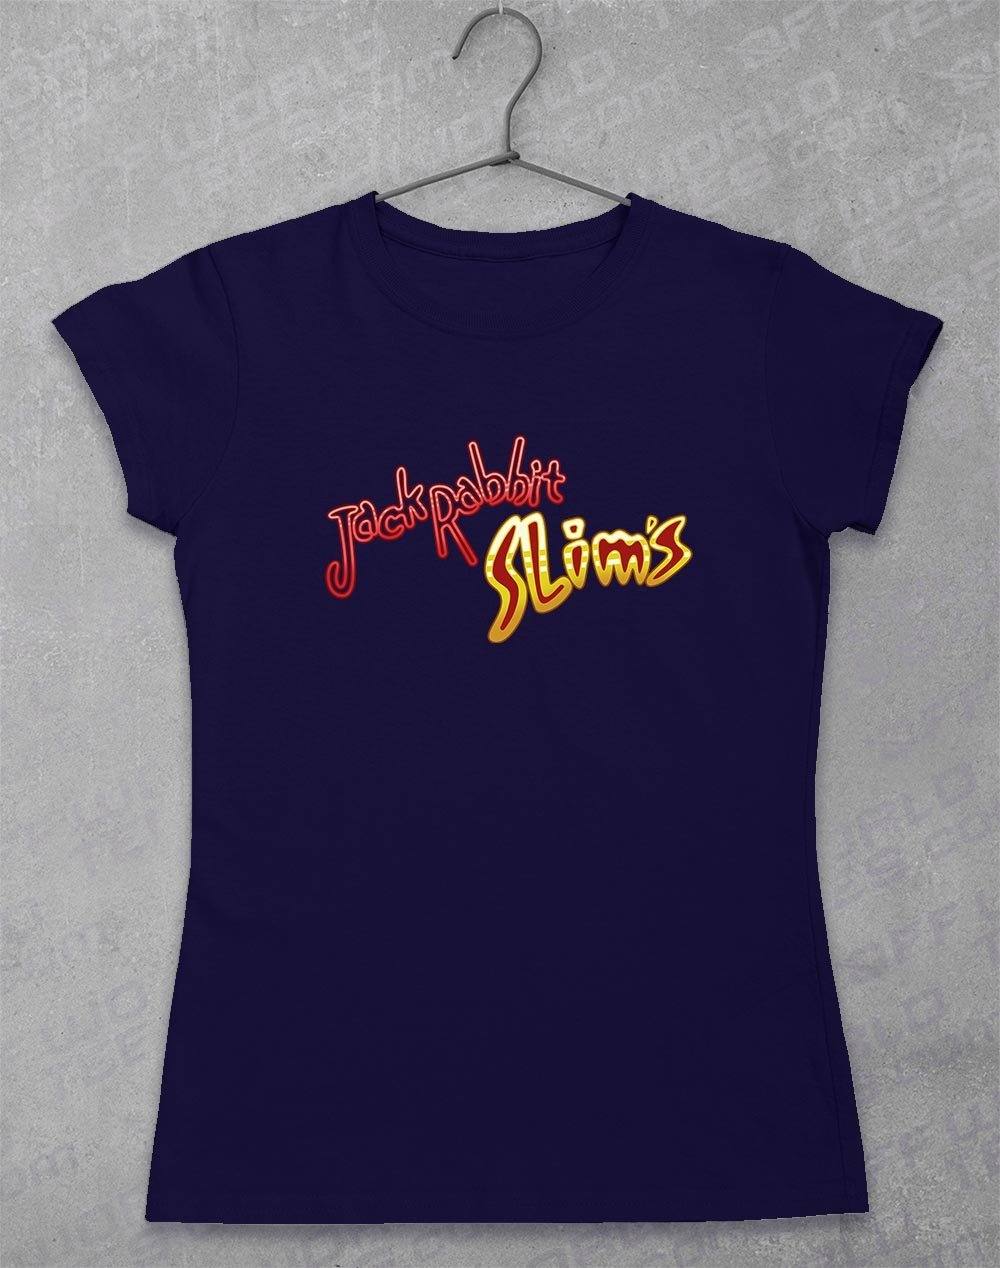 Jack Rabbit Slim's Women's T-Shirt 8-10 / Navy  - Off World Tees